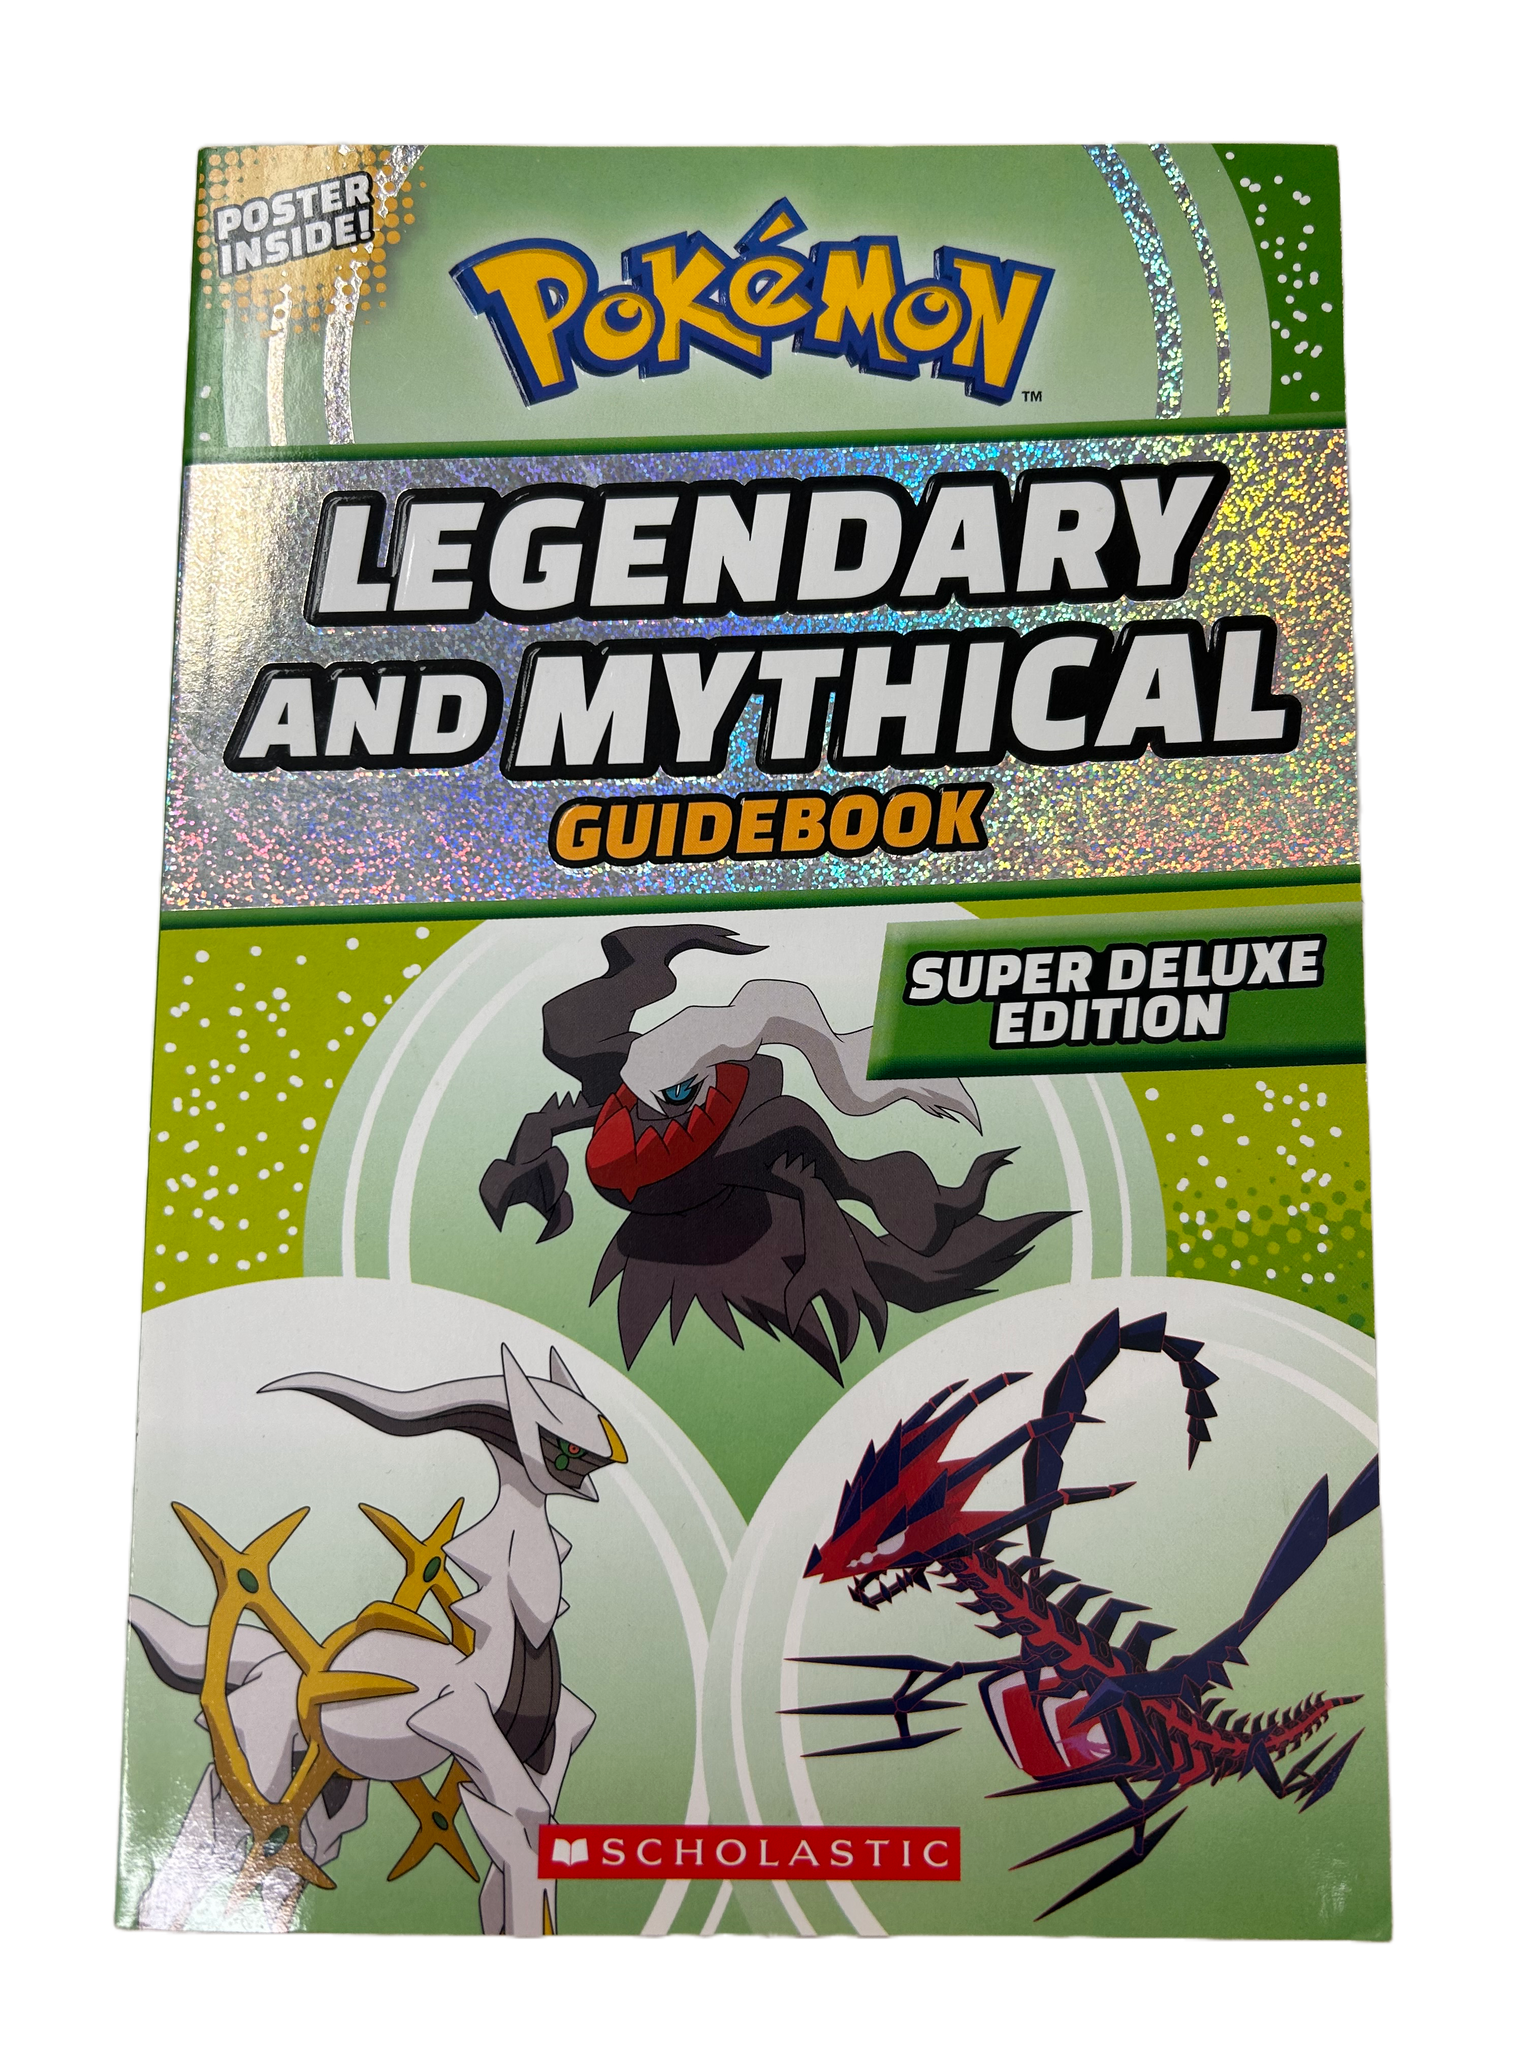 Pokémon Legendary and Mythical Guidebook